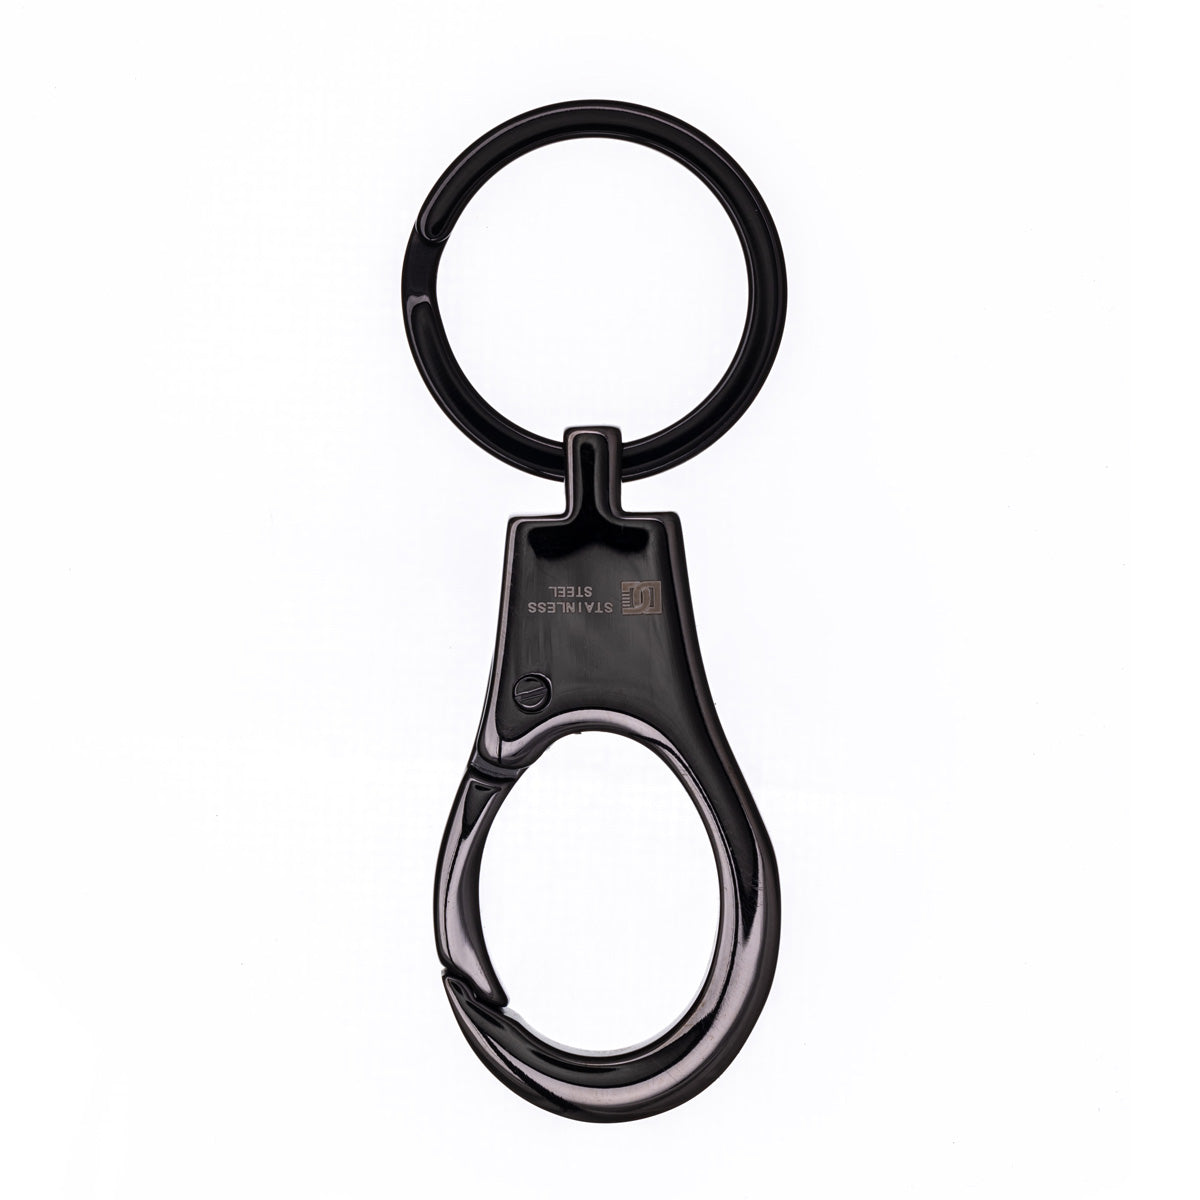 Patterned dark steel key ring with quick lock carabiner (Steel 316L)